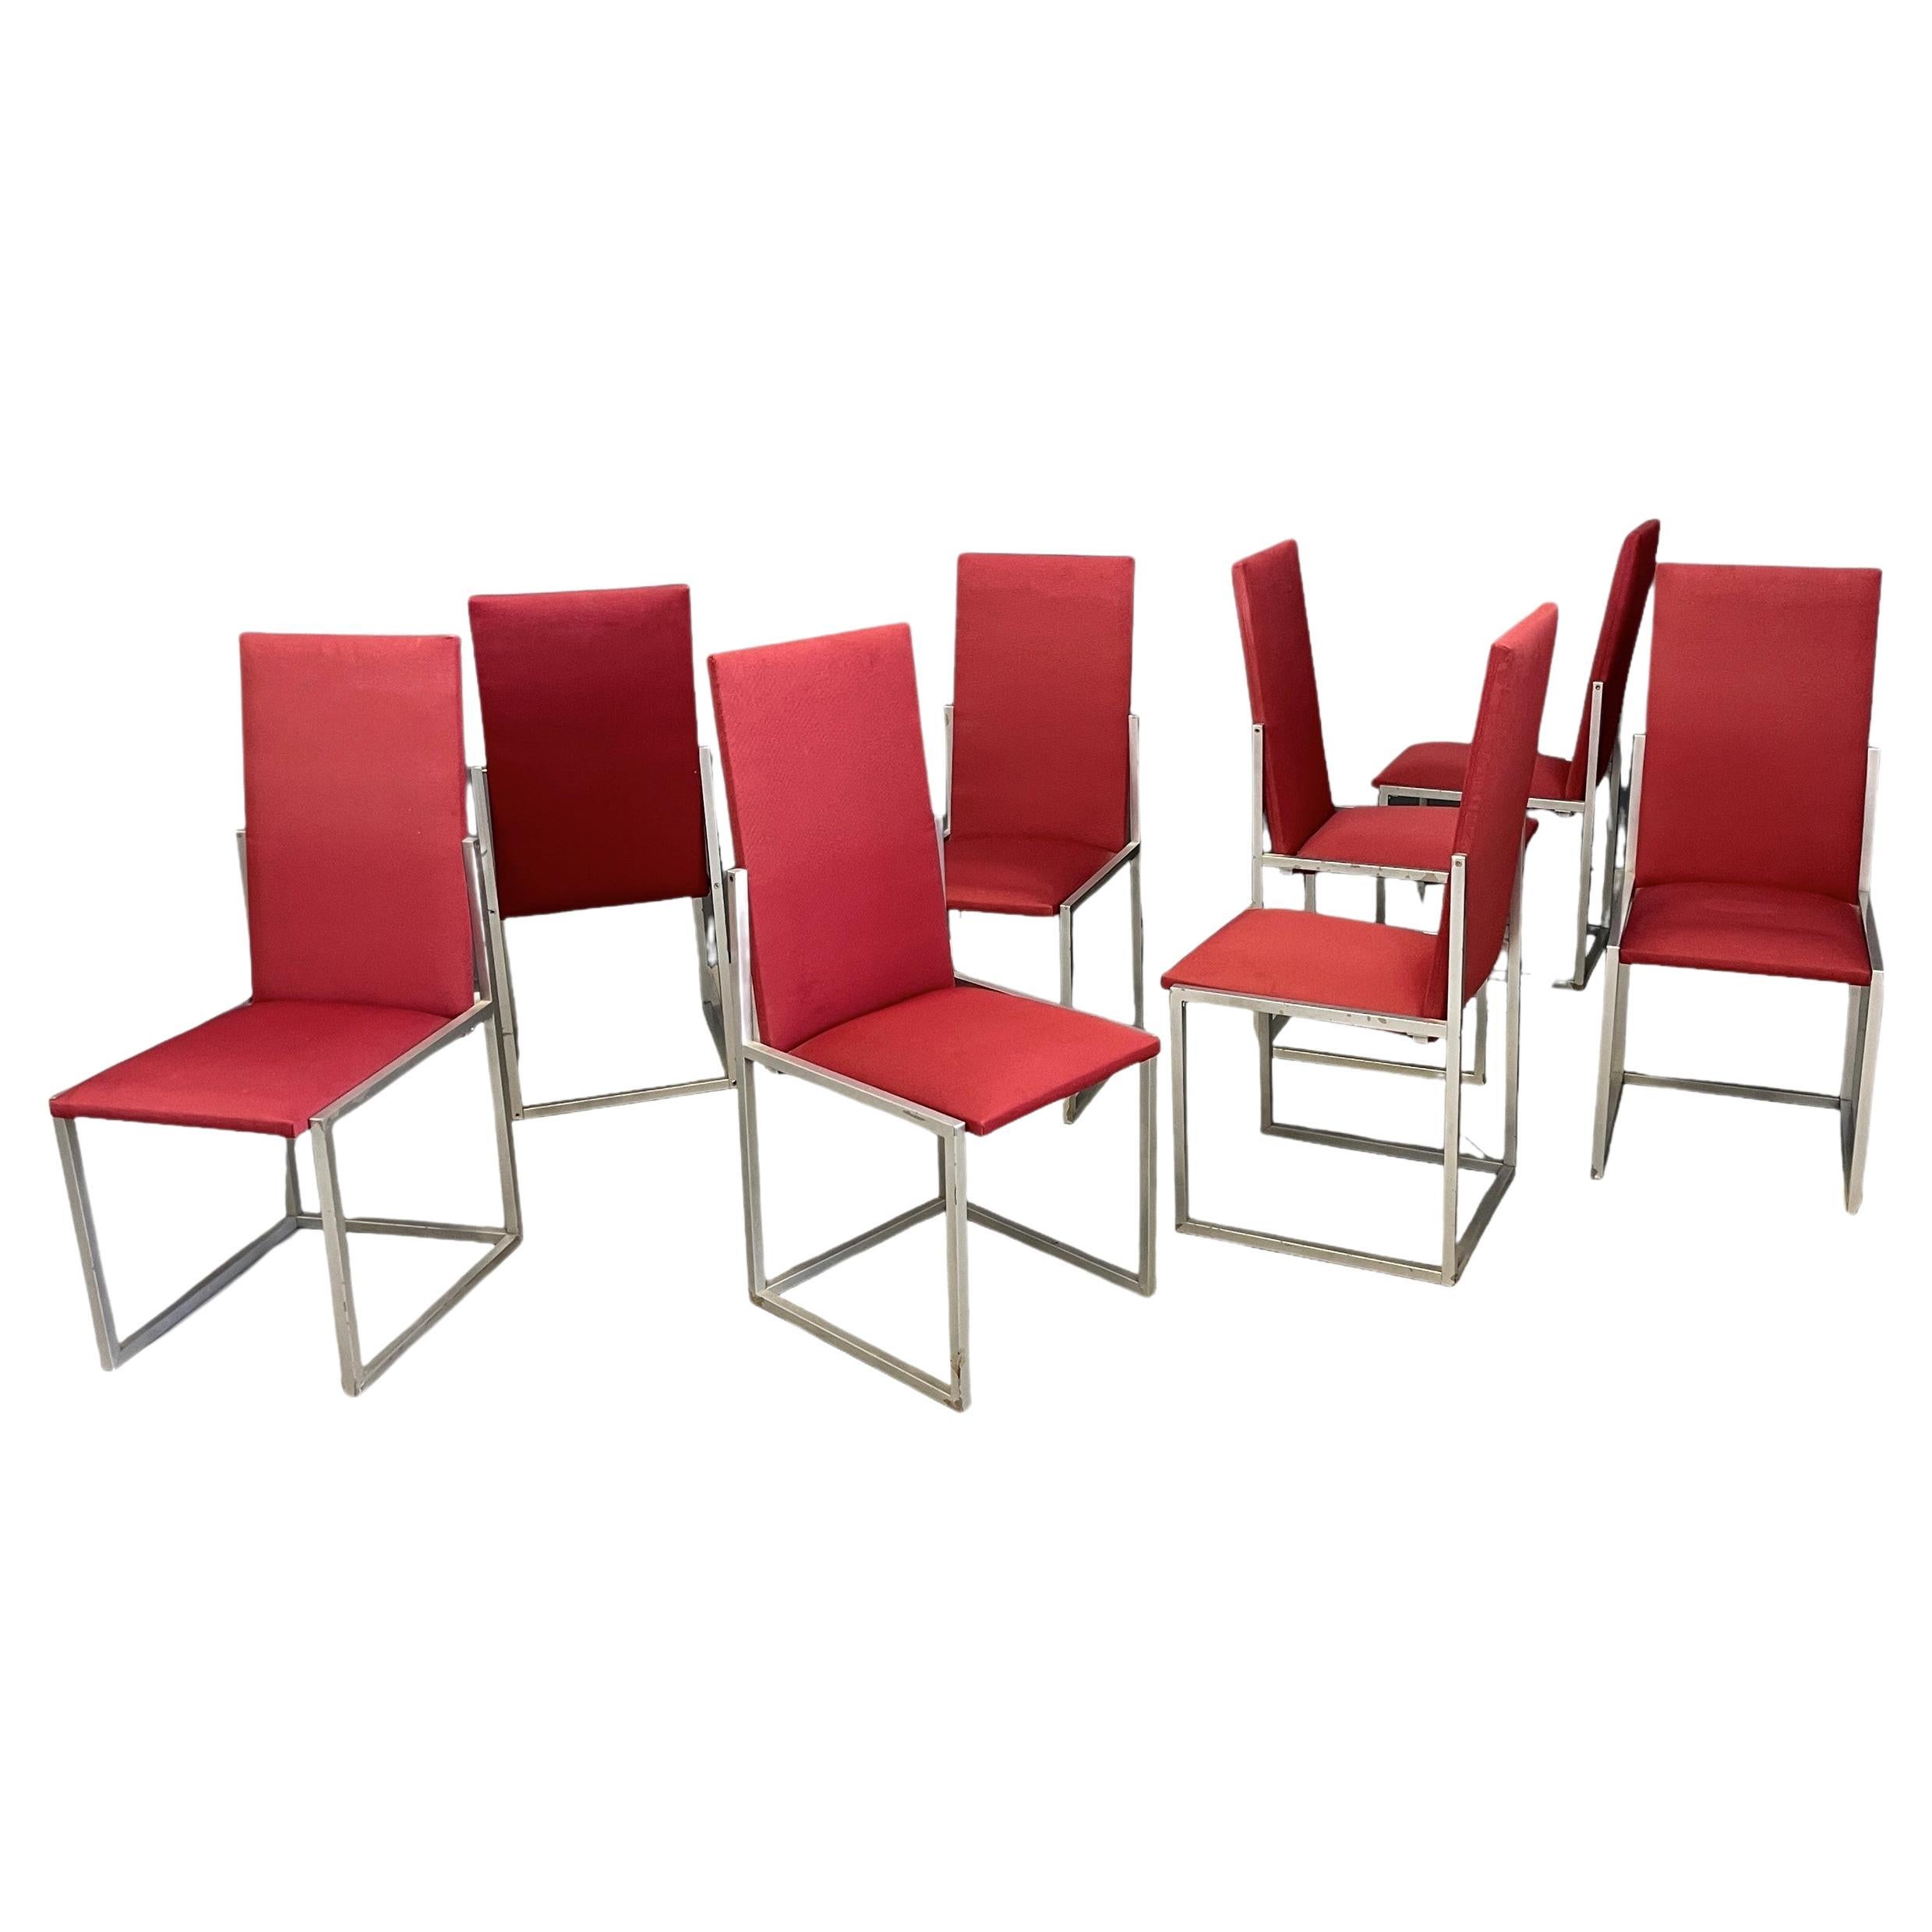 Eight Italian Chairs, Turri Production, 1970s